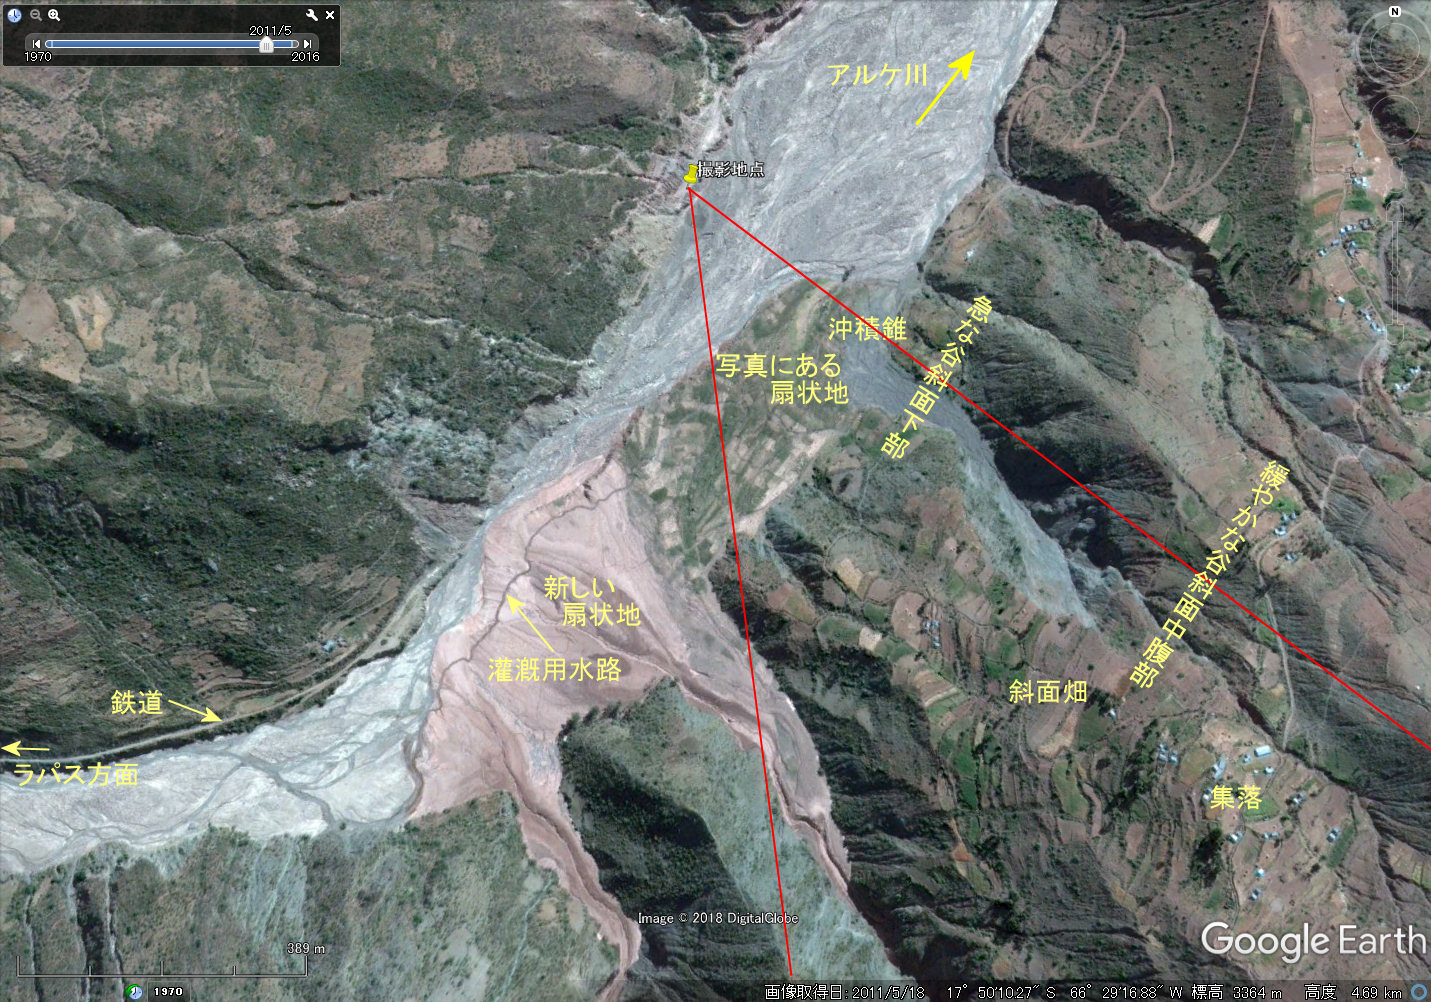 Google Earth image on the middle stream of Rio Arque, Cochabamba